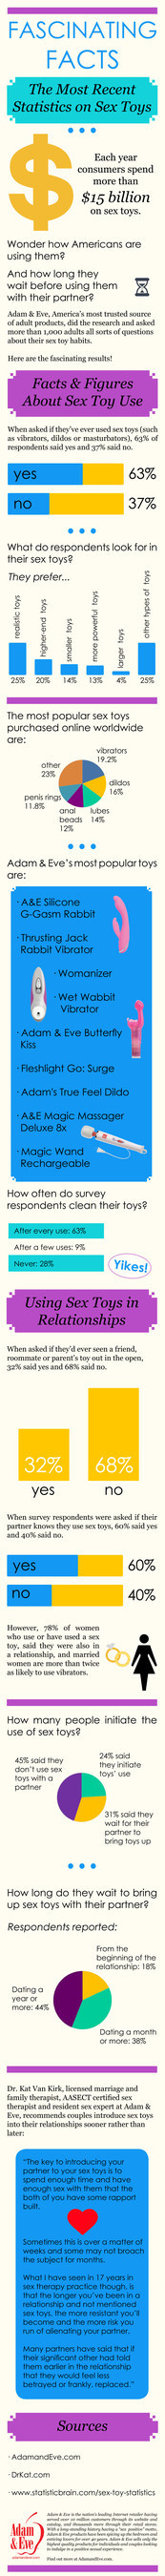 Adamandeve.com Reveals Statistics On Sex Toys